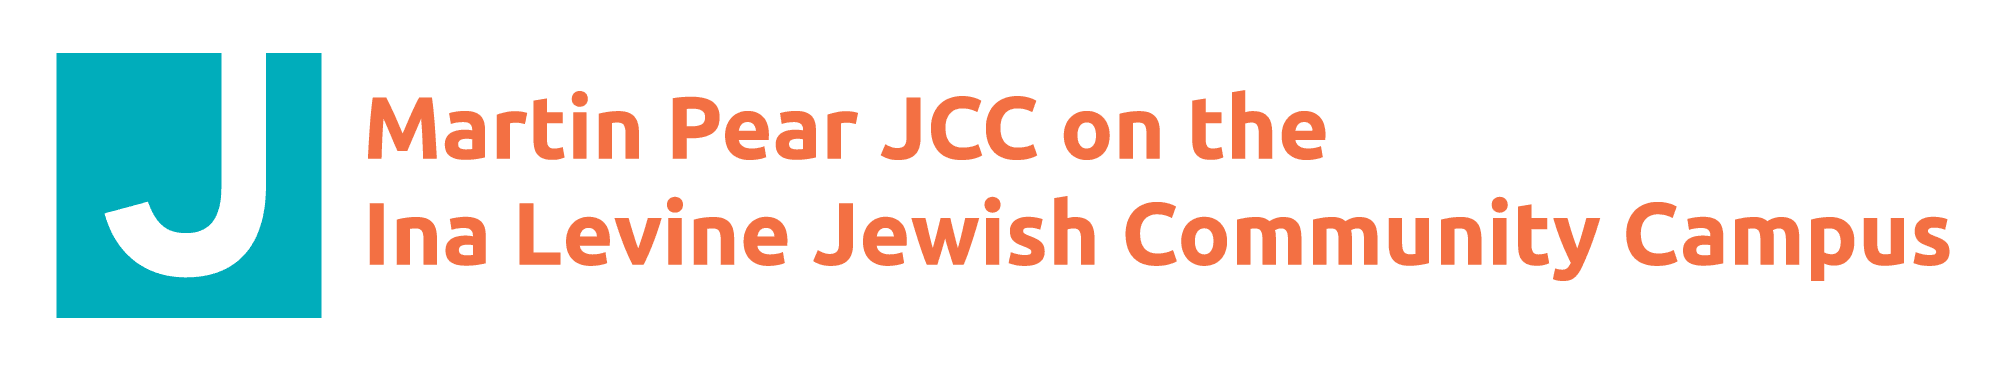 martin-pear-jcc-logo